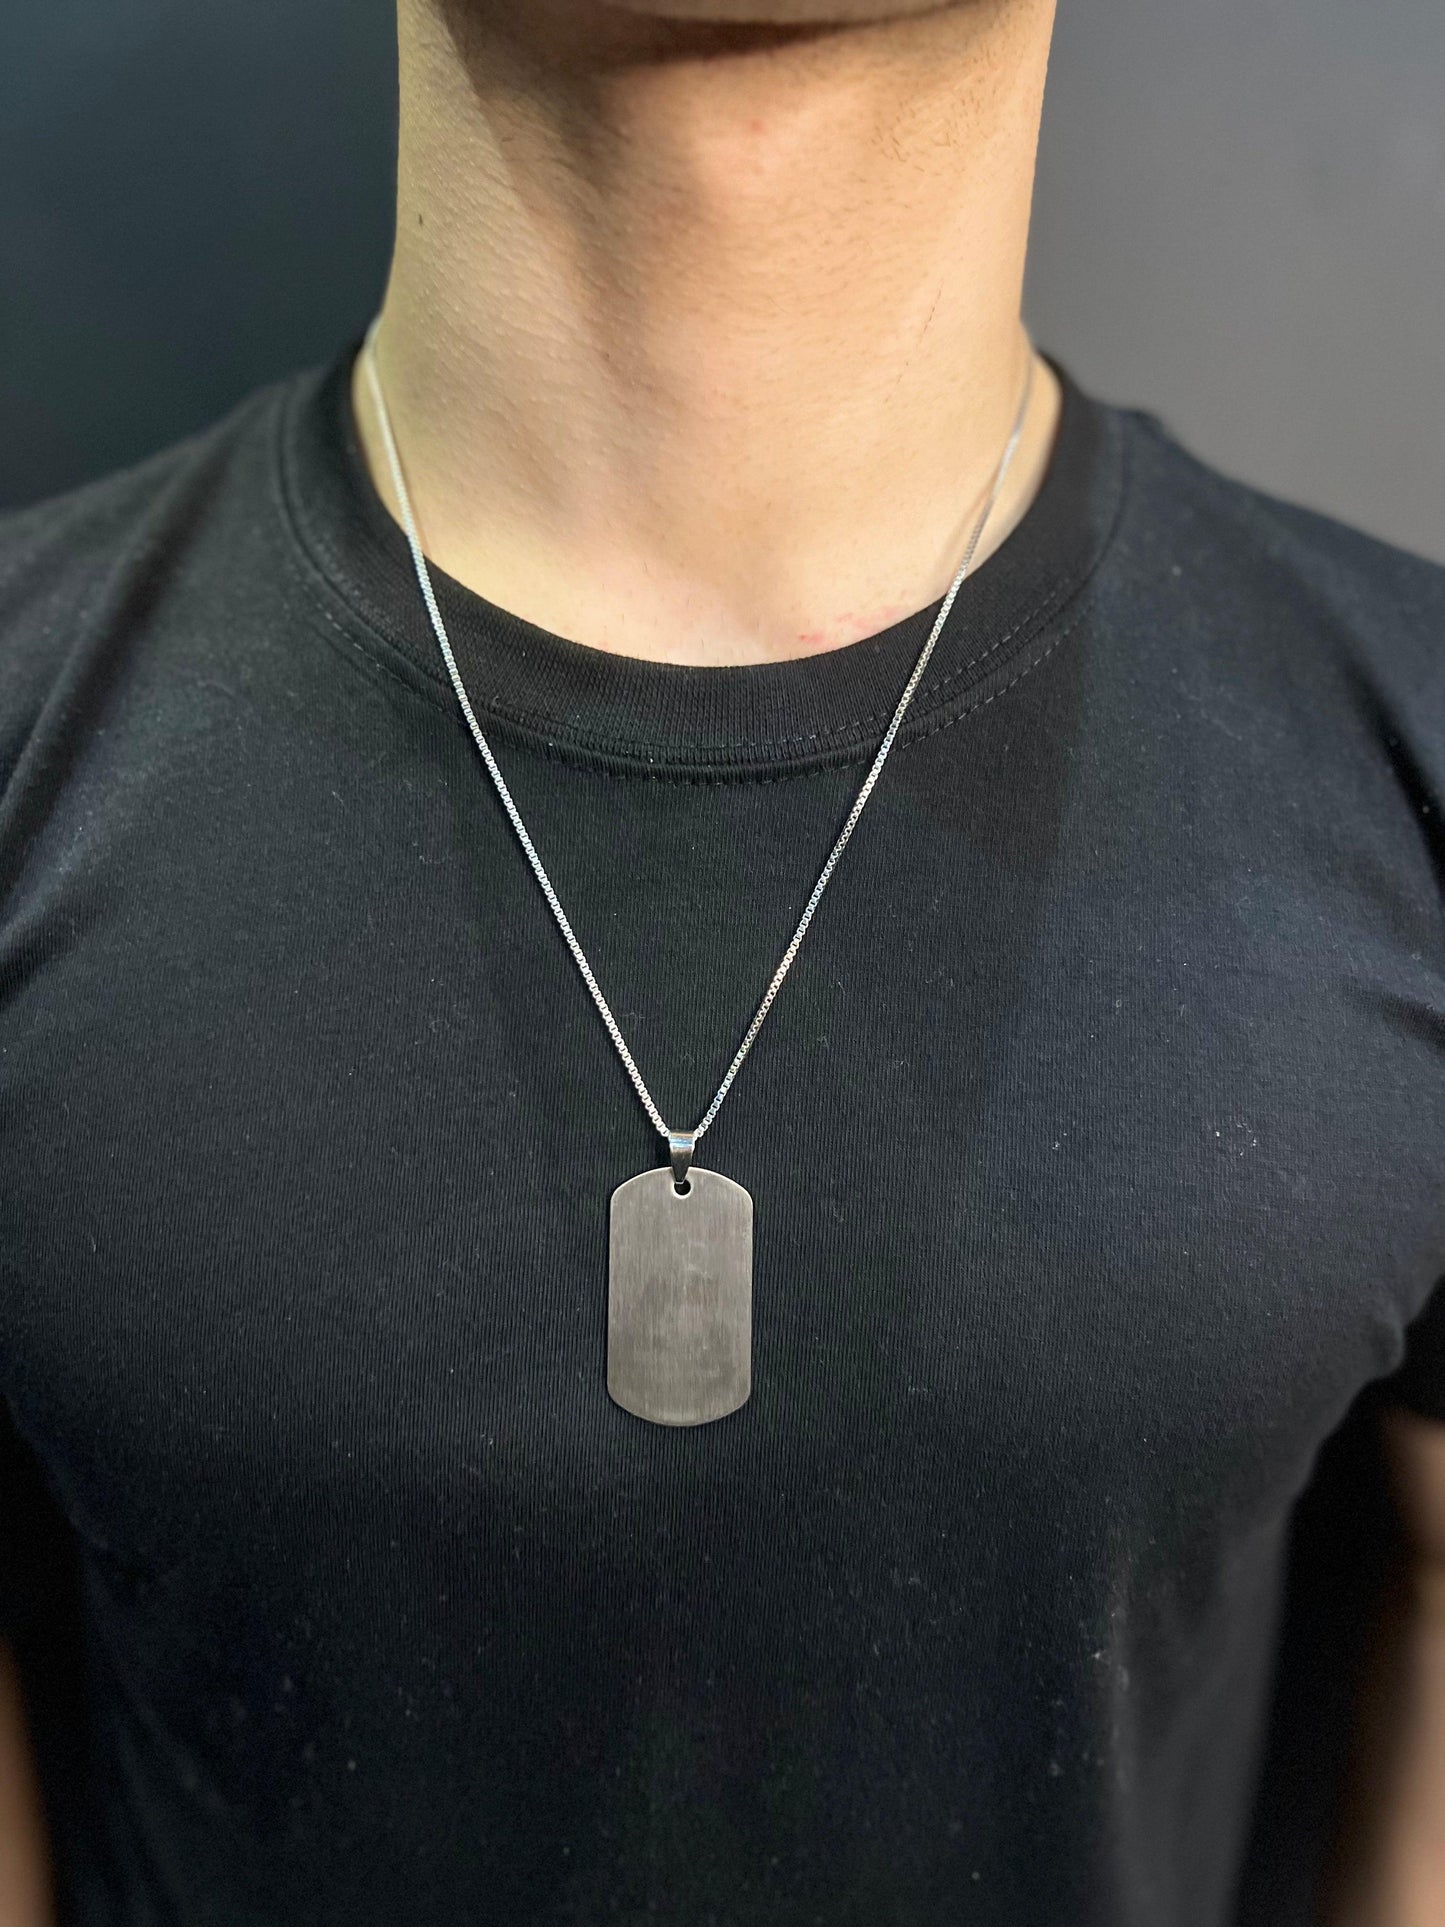 silver dog tag pendant , black shirt , front side